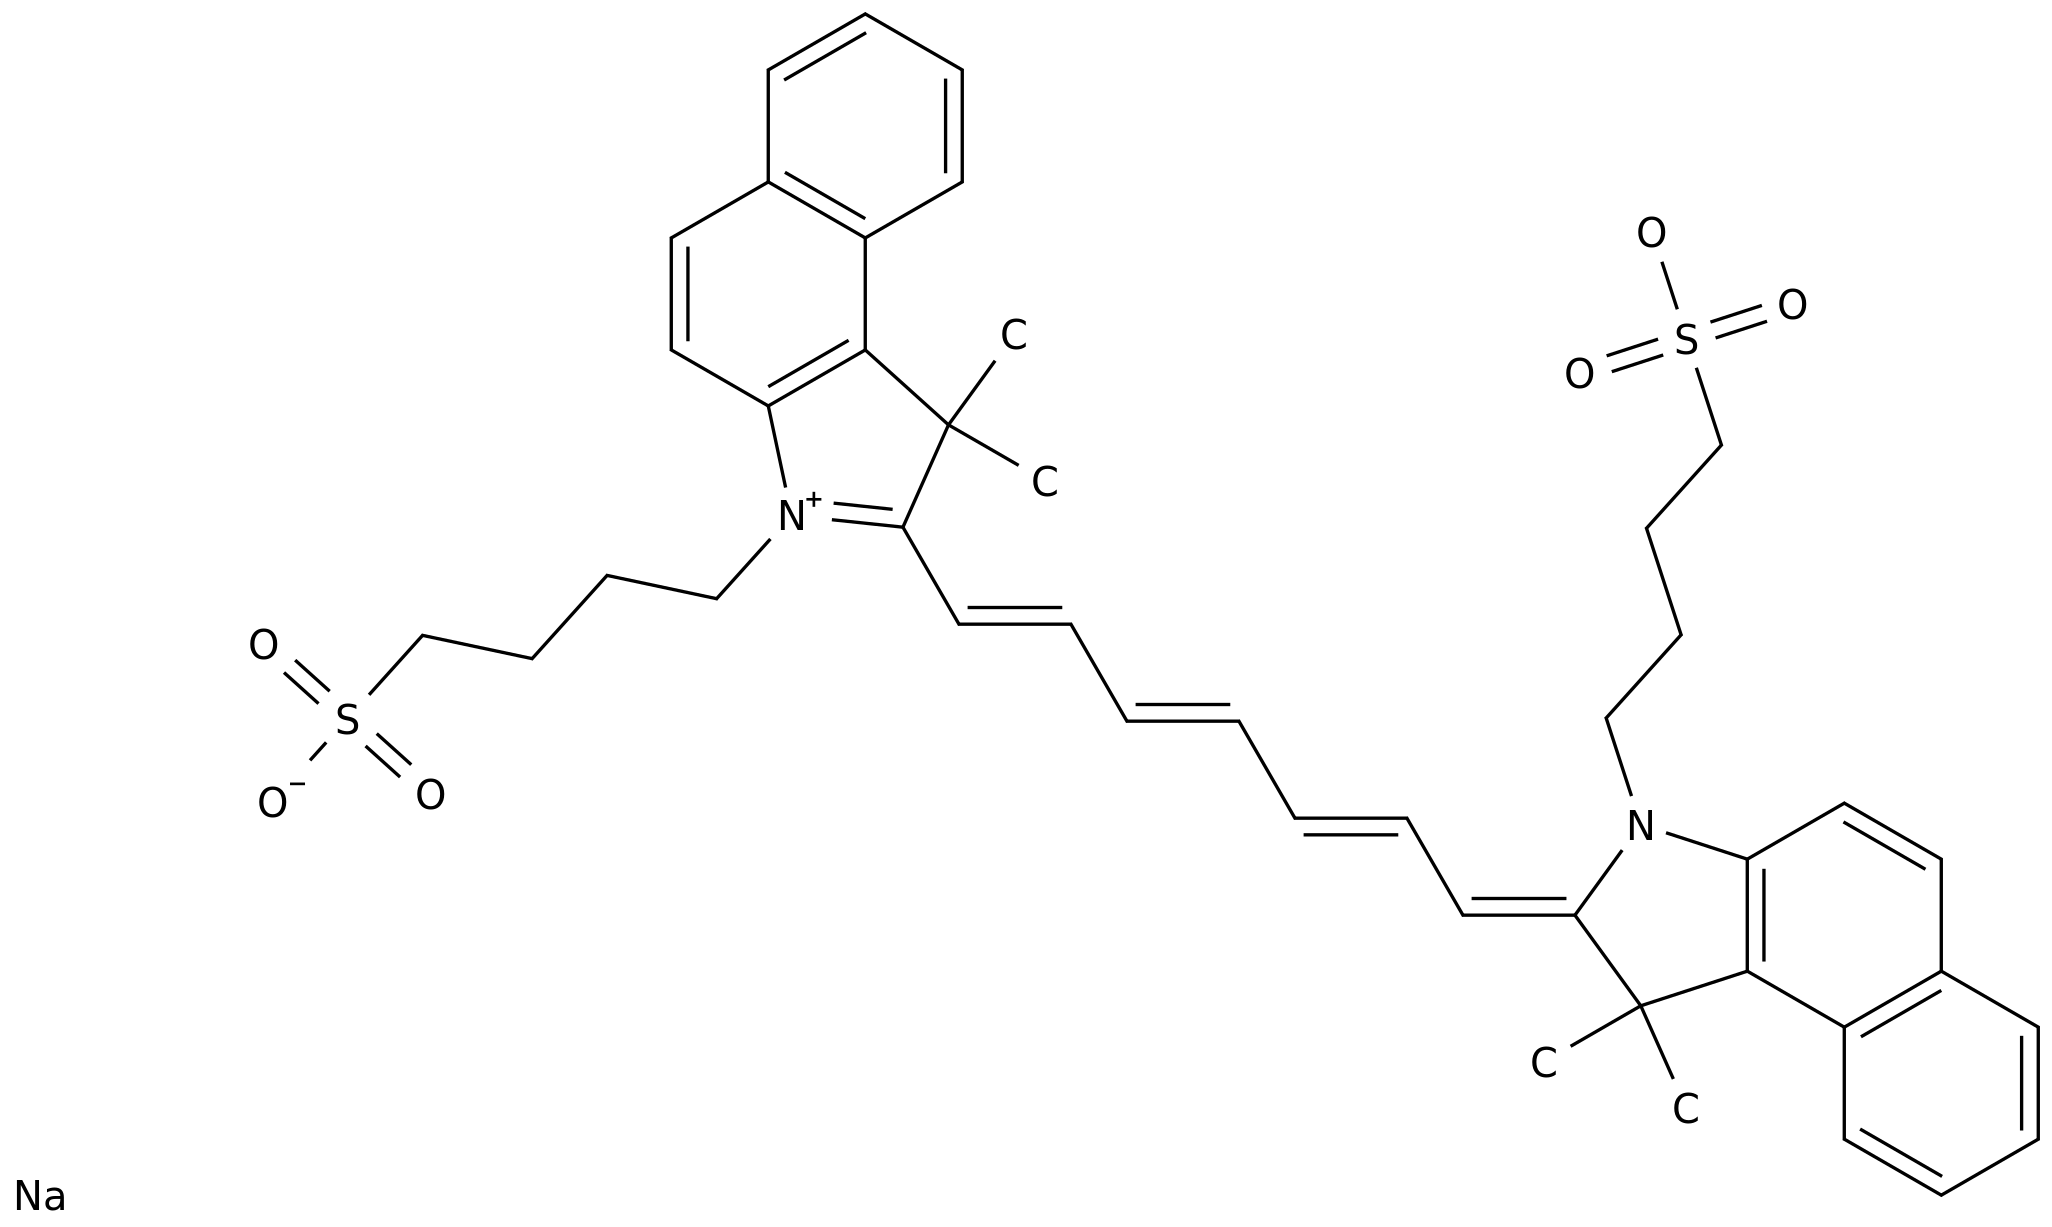 1H-Benz[e]indolium,2-[7-[1,3-dihydro-1,1-dimethyl-3-(4-sulfobutyl)-2H-benz[e]indol-2-ylidene]-1,3,5-heptatrien-1-yl]-1,1-dimethyl-3-(4-sulfobutyl)-,inner salt, sodium salt (1:1)